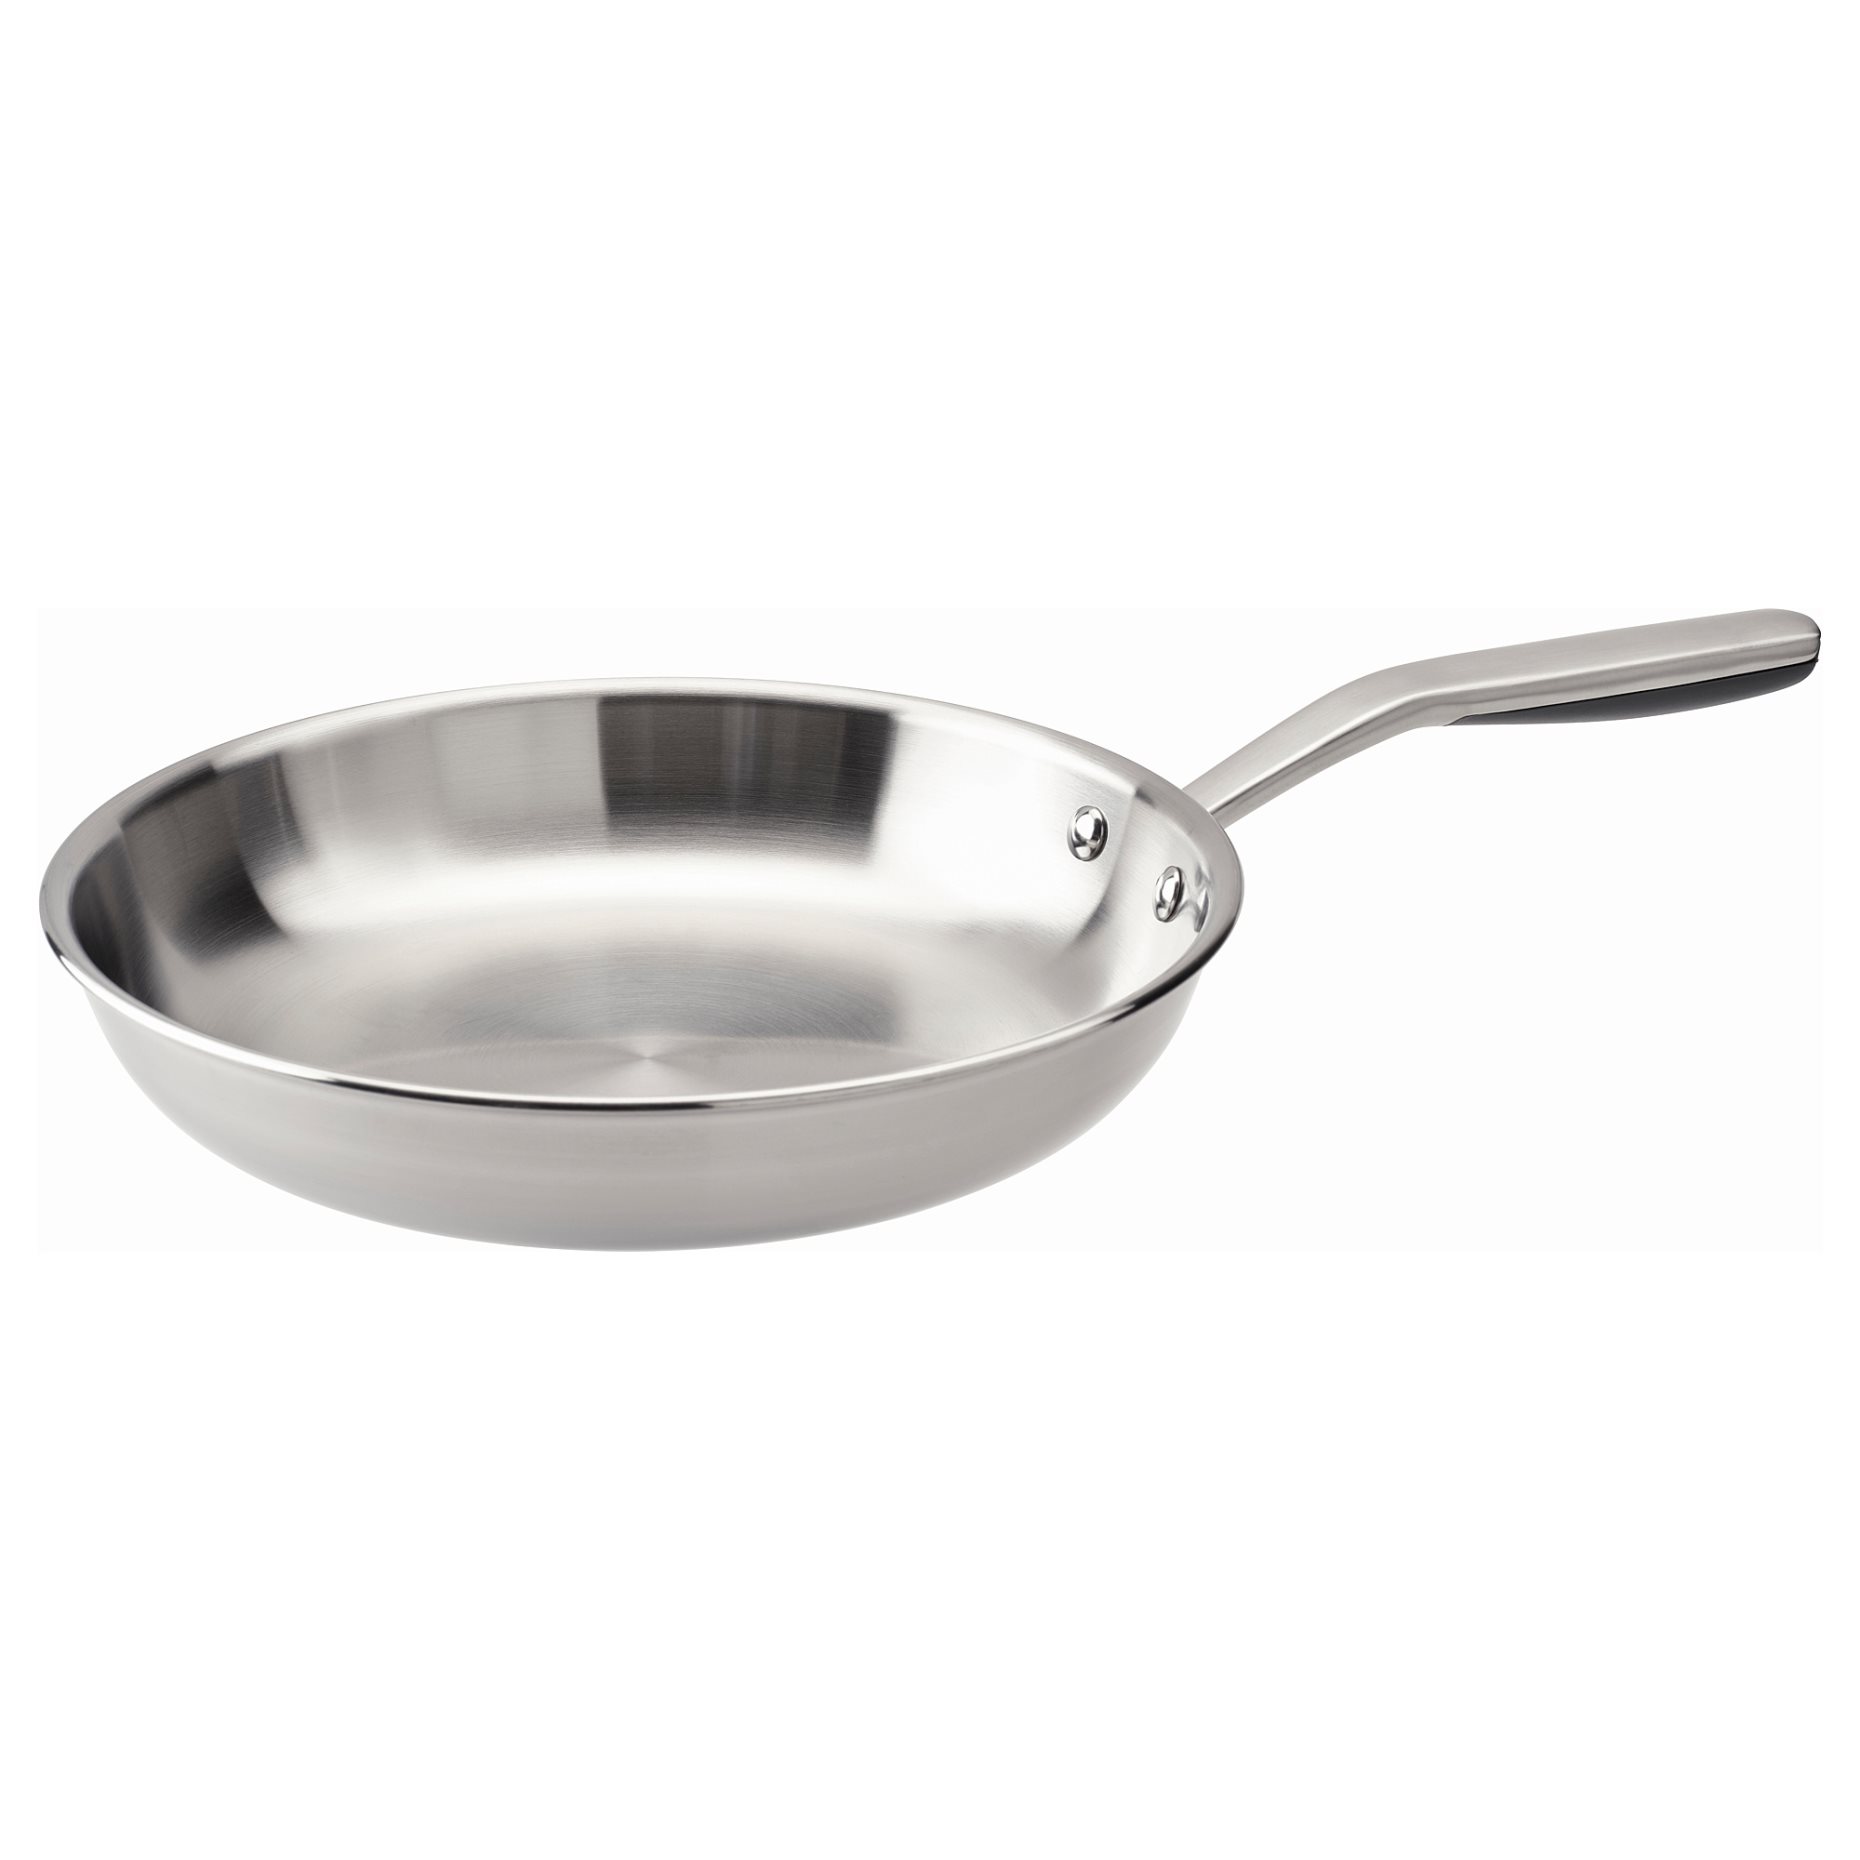 SENSUELL, frying pan, 603.245.44